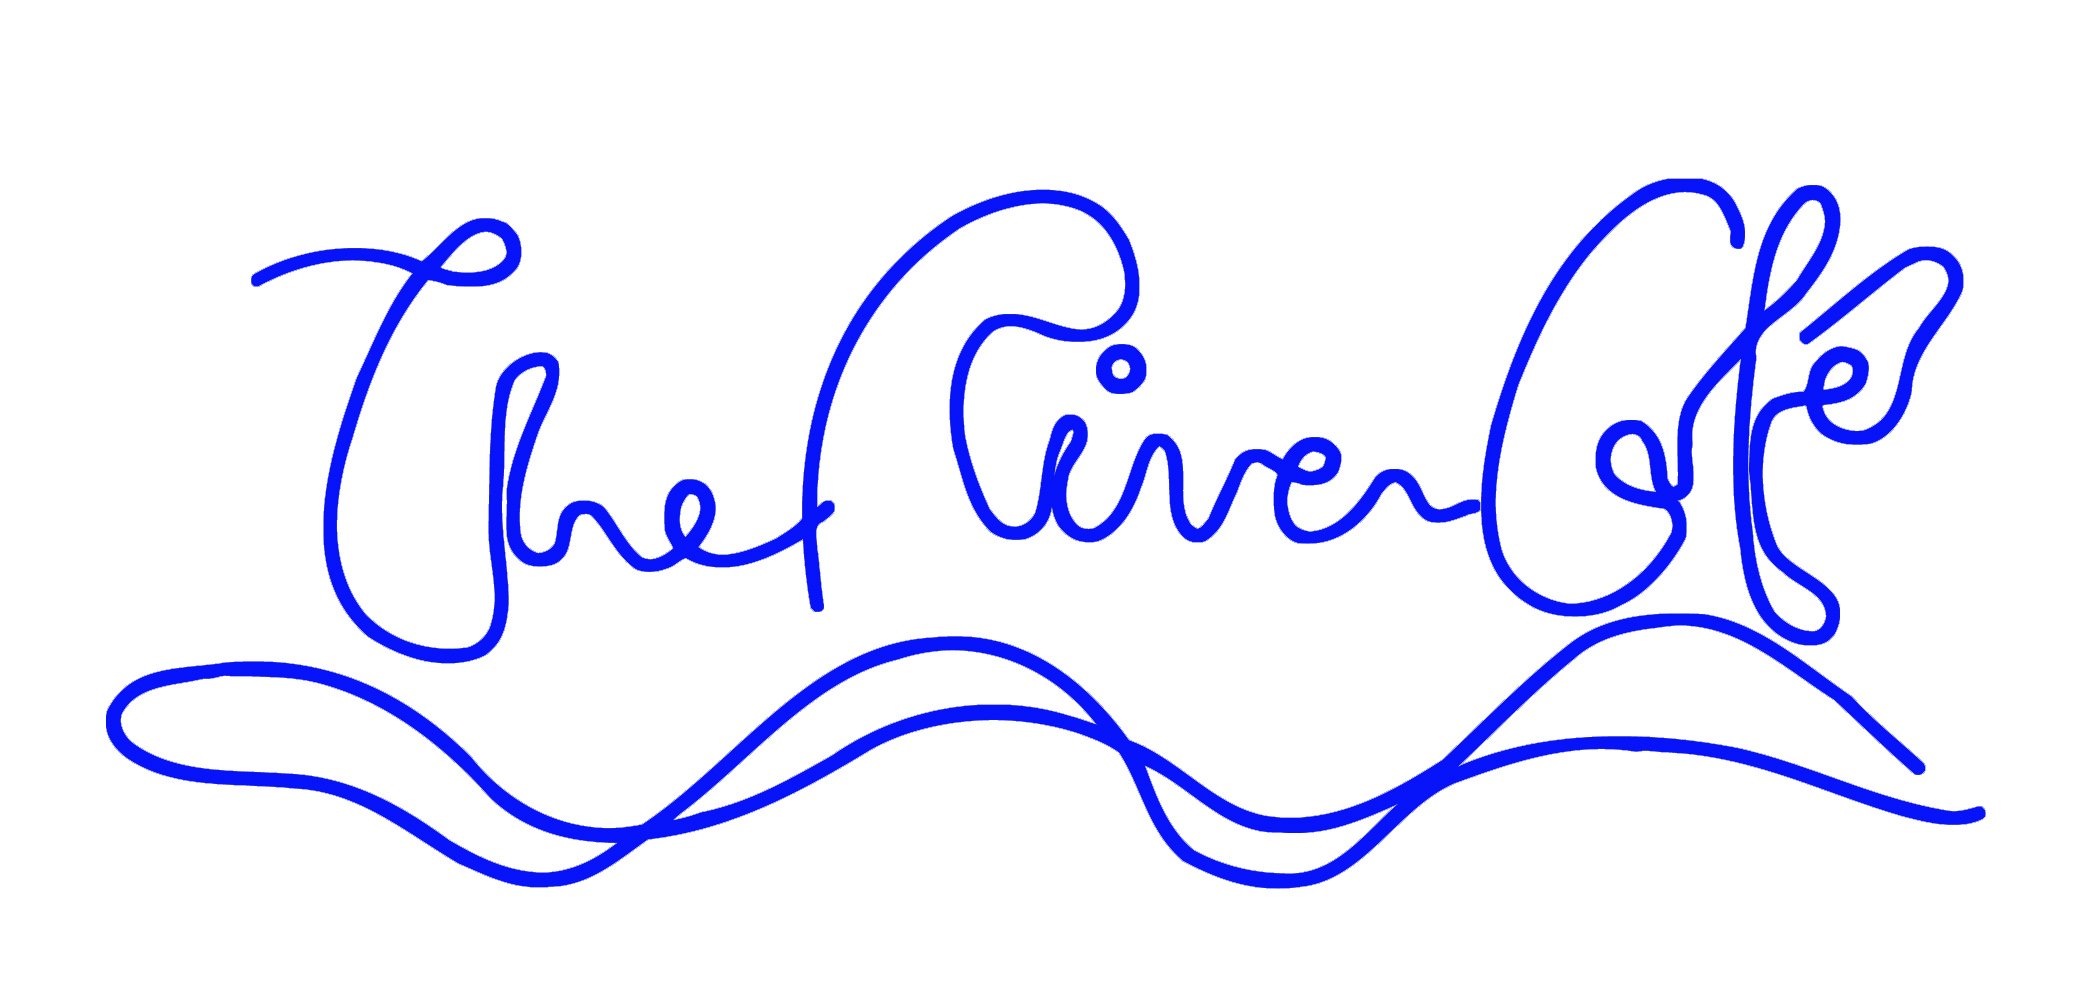 River Cafe logo blue 7 inch.jpg